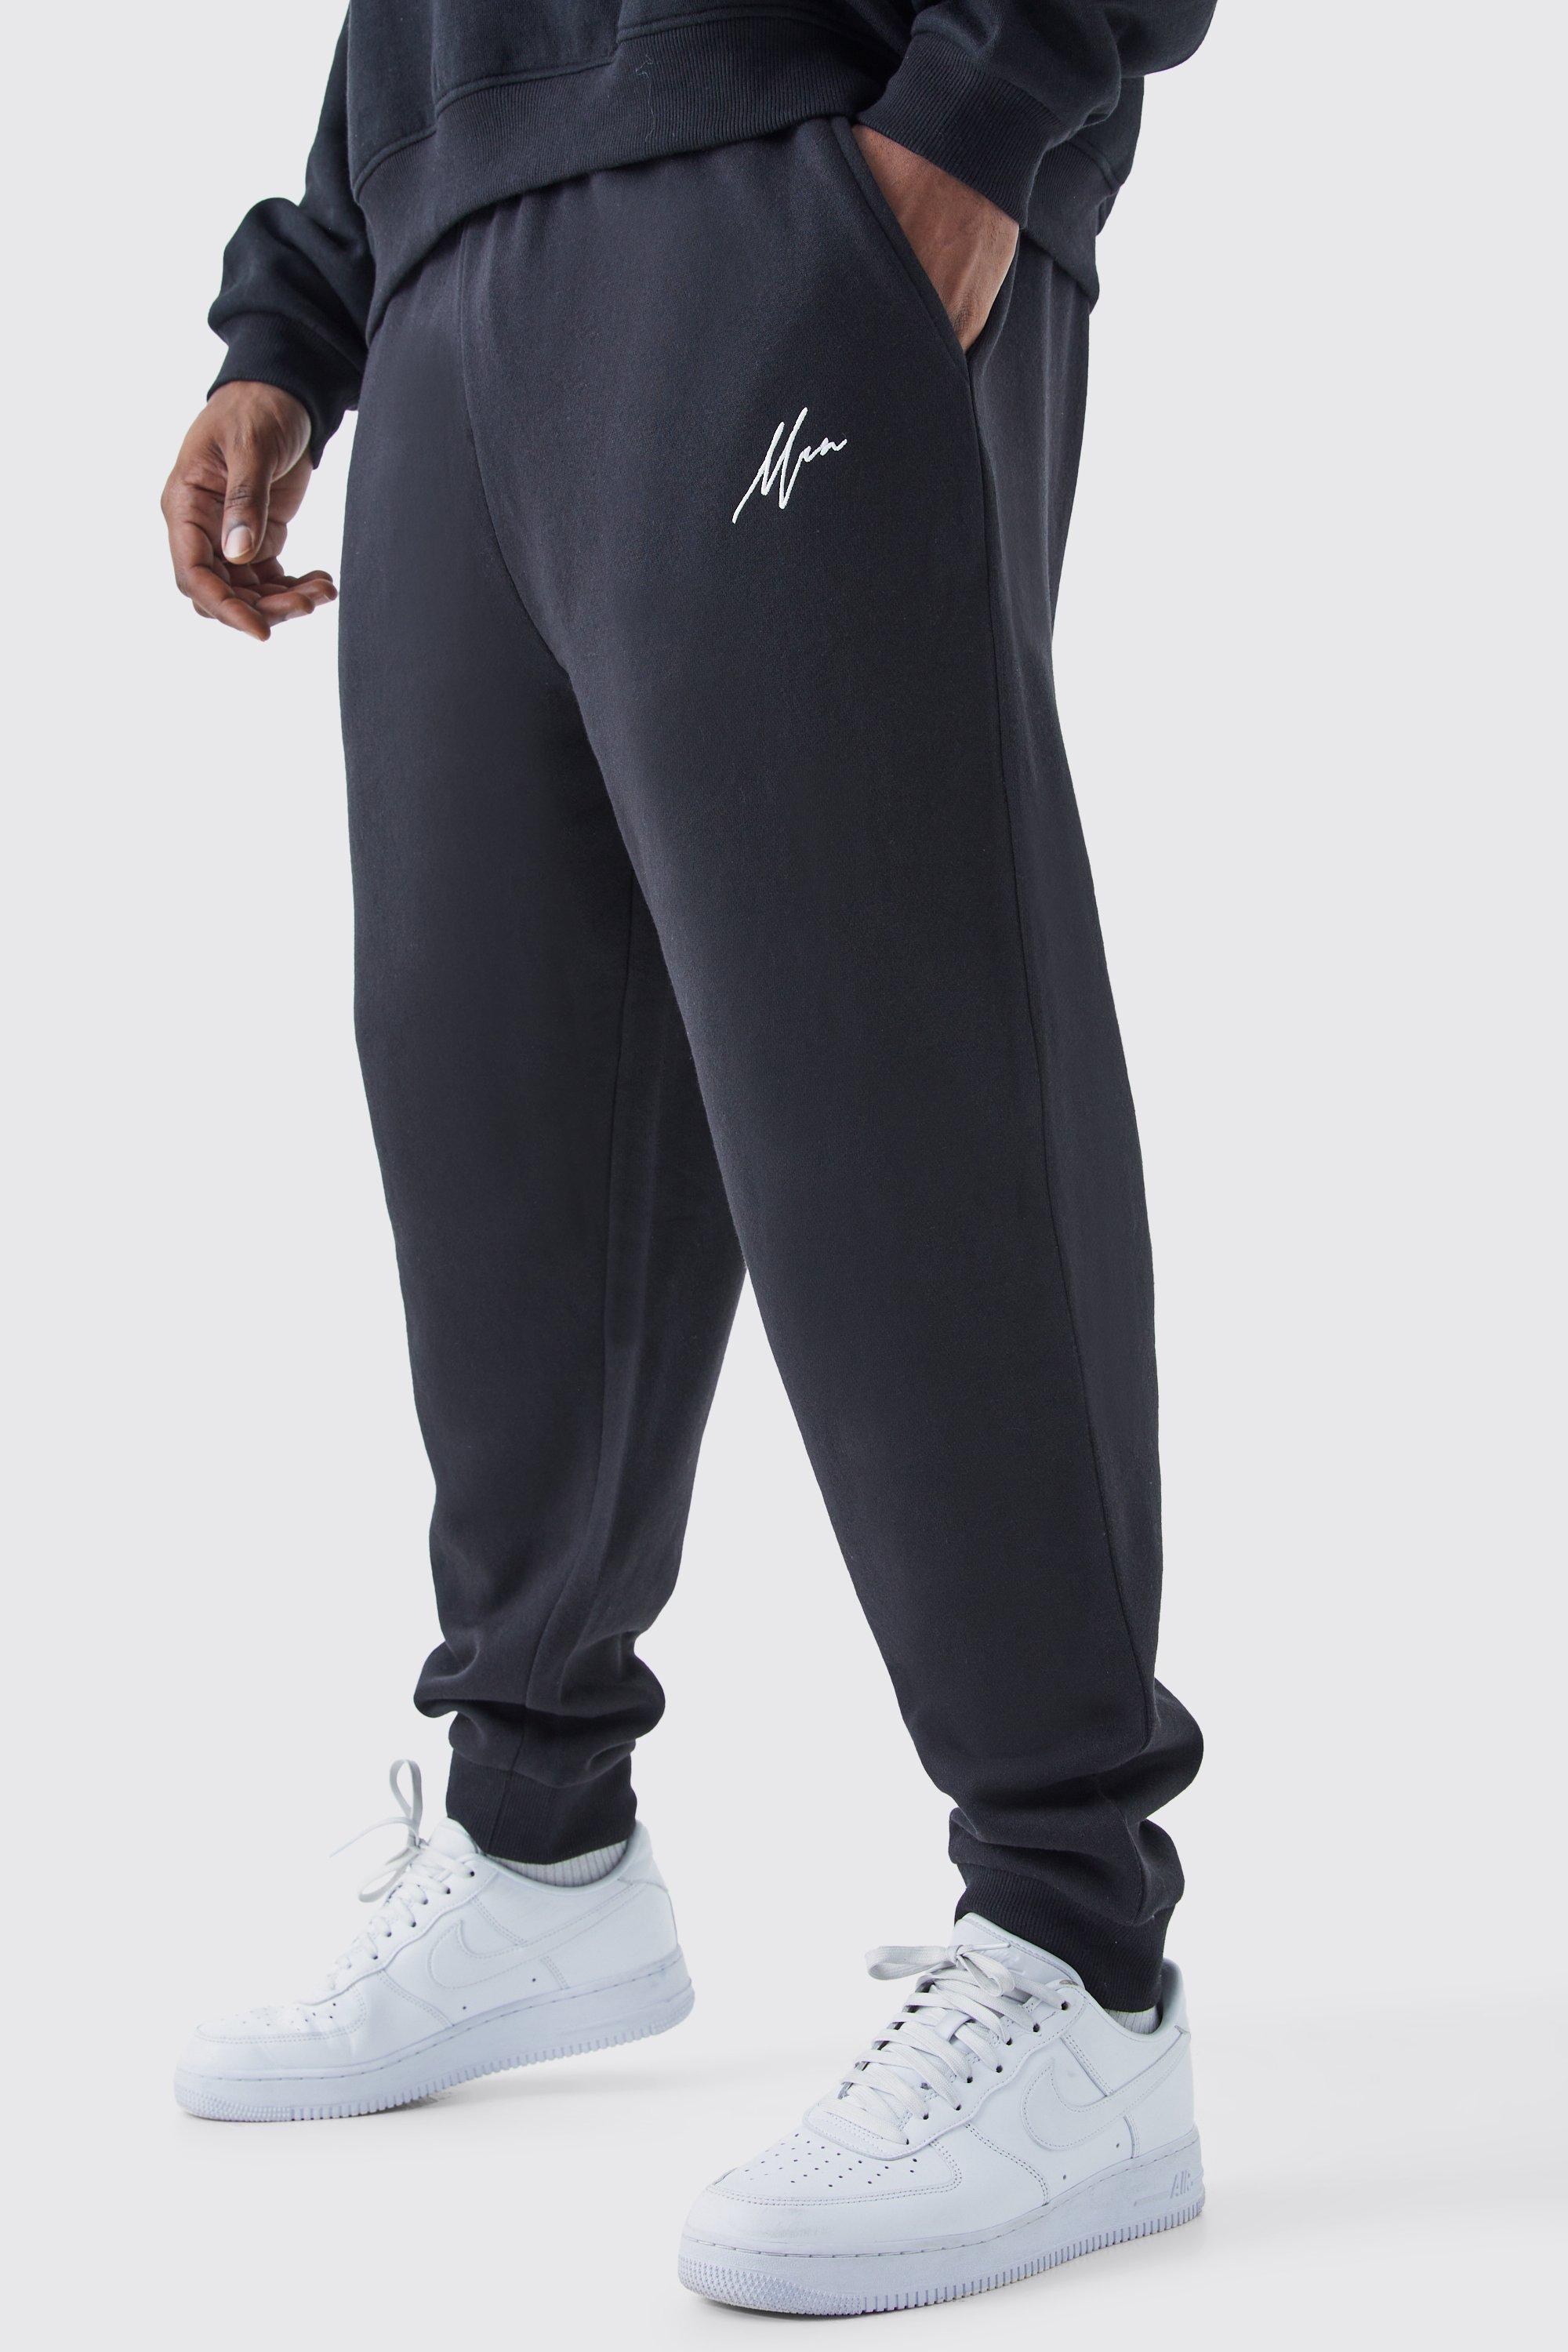 Image of Pantaloni tuta Plus Size Man Core Fit, Nero